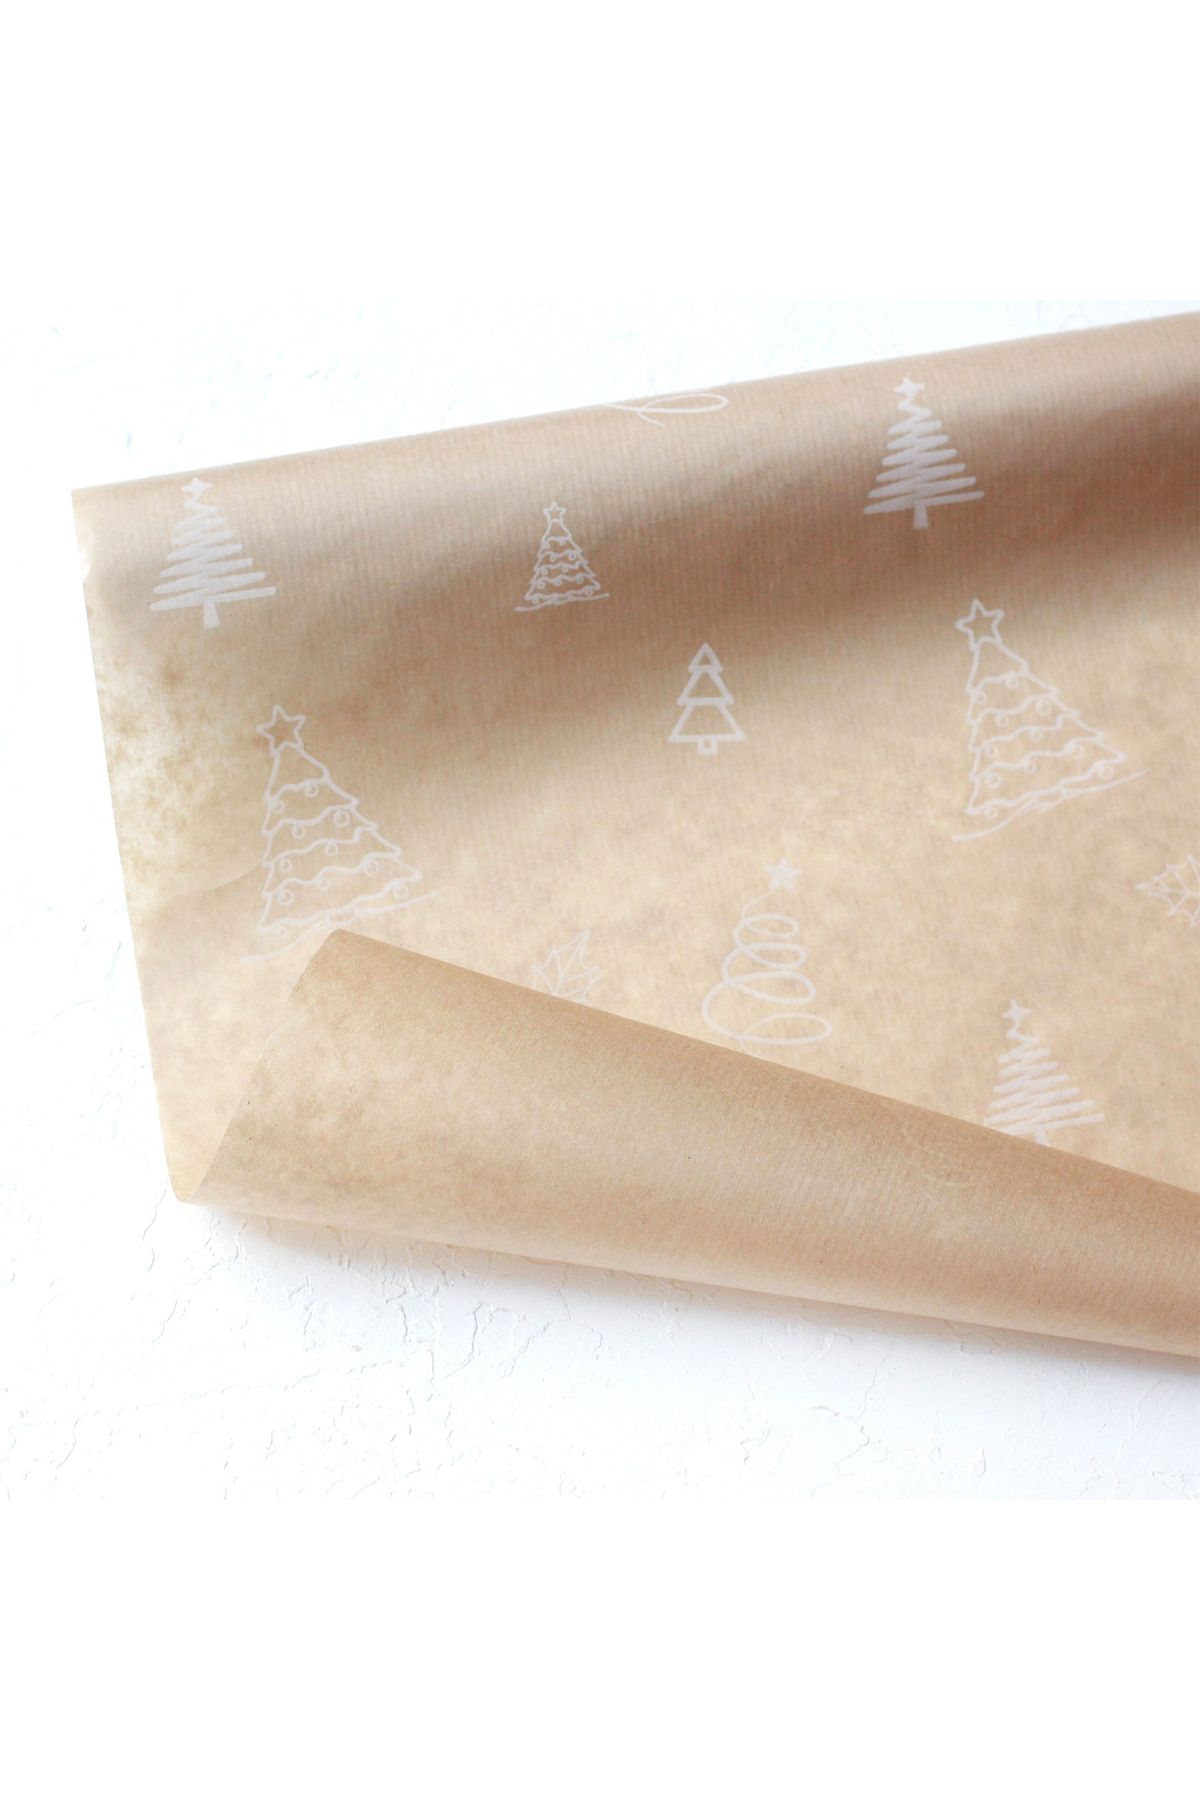 Bimotif Çam Desenli Paket Kağıdı, 70x100 Cm 5 Adet